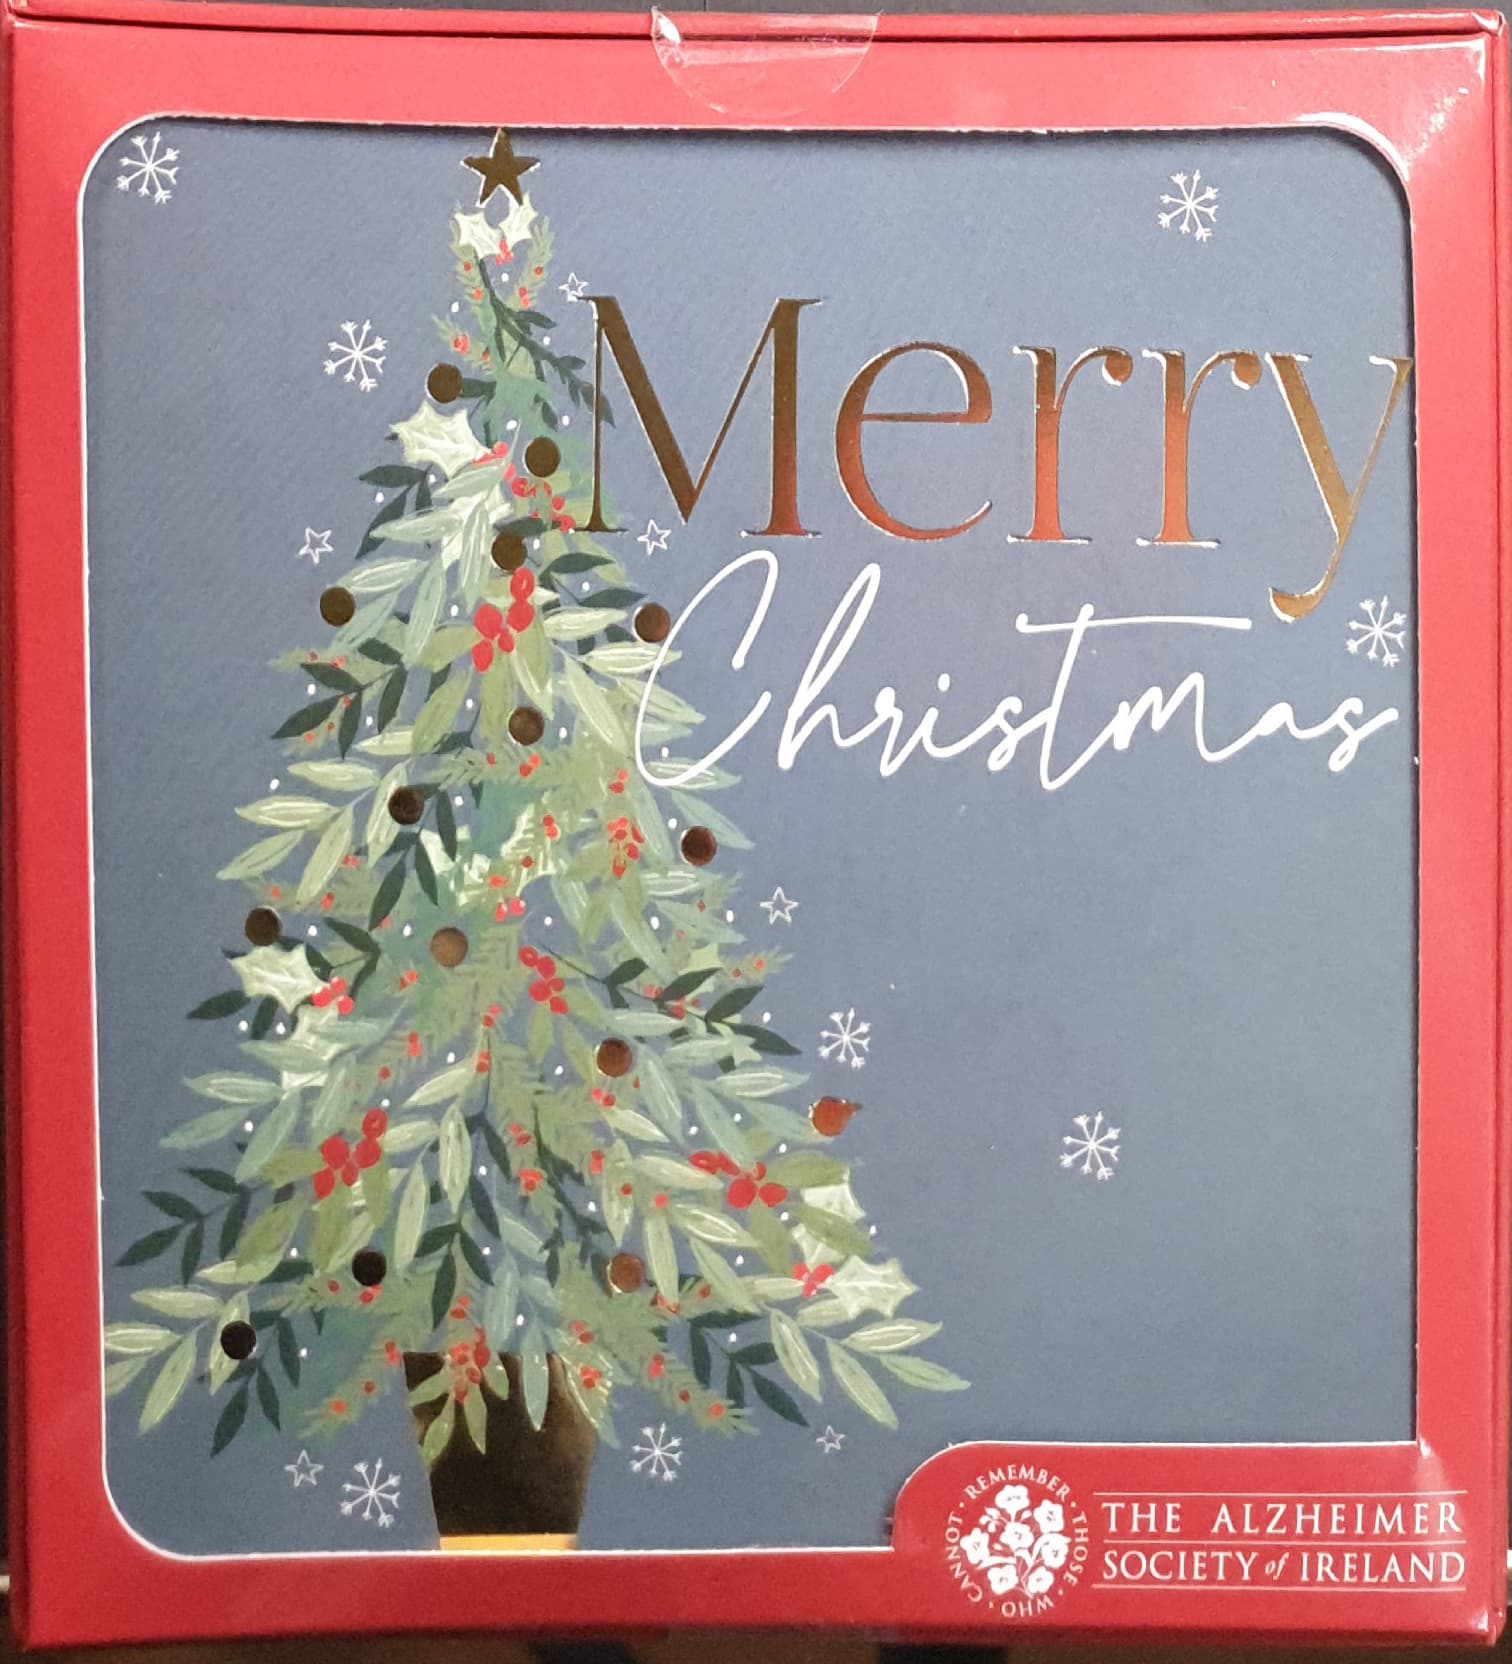 Charity Christmas Card (In Irish & English) - Box of 16 / Alzheimer Society of Ireland - Christmas Tree & Blue Background